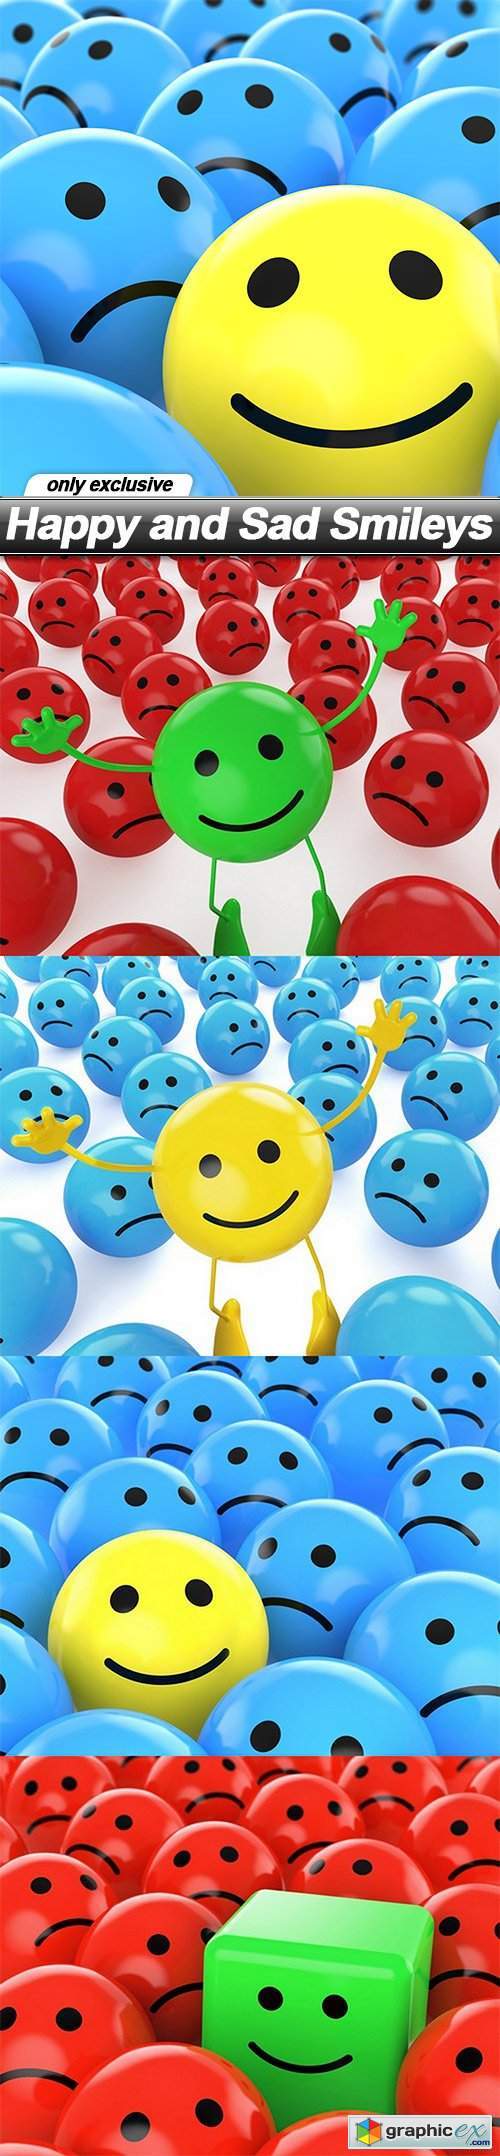 Happy and Sad Smileys - 5 UHQ JPEG